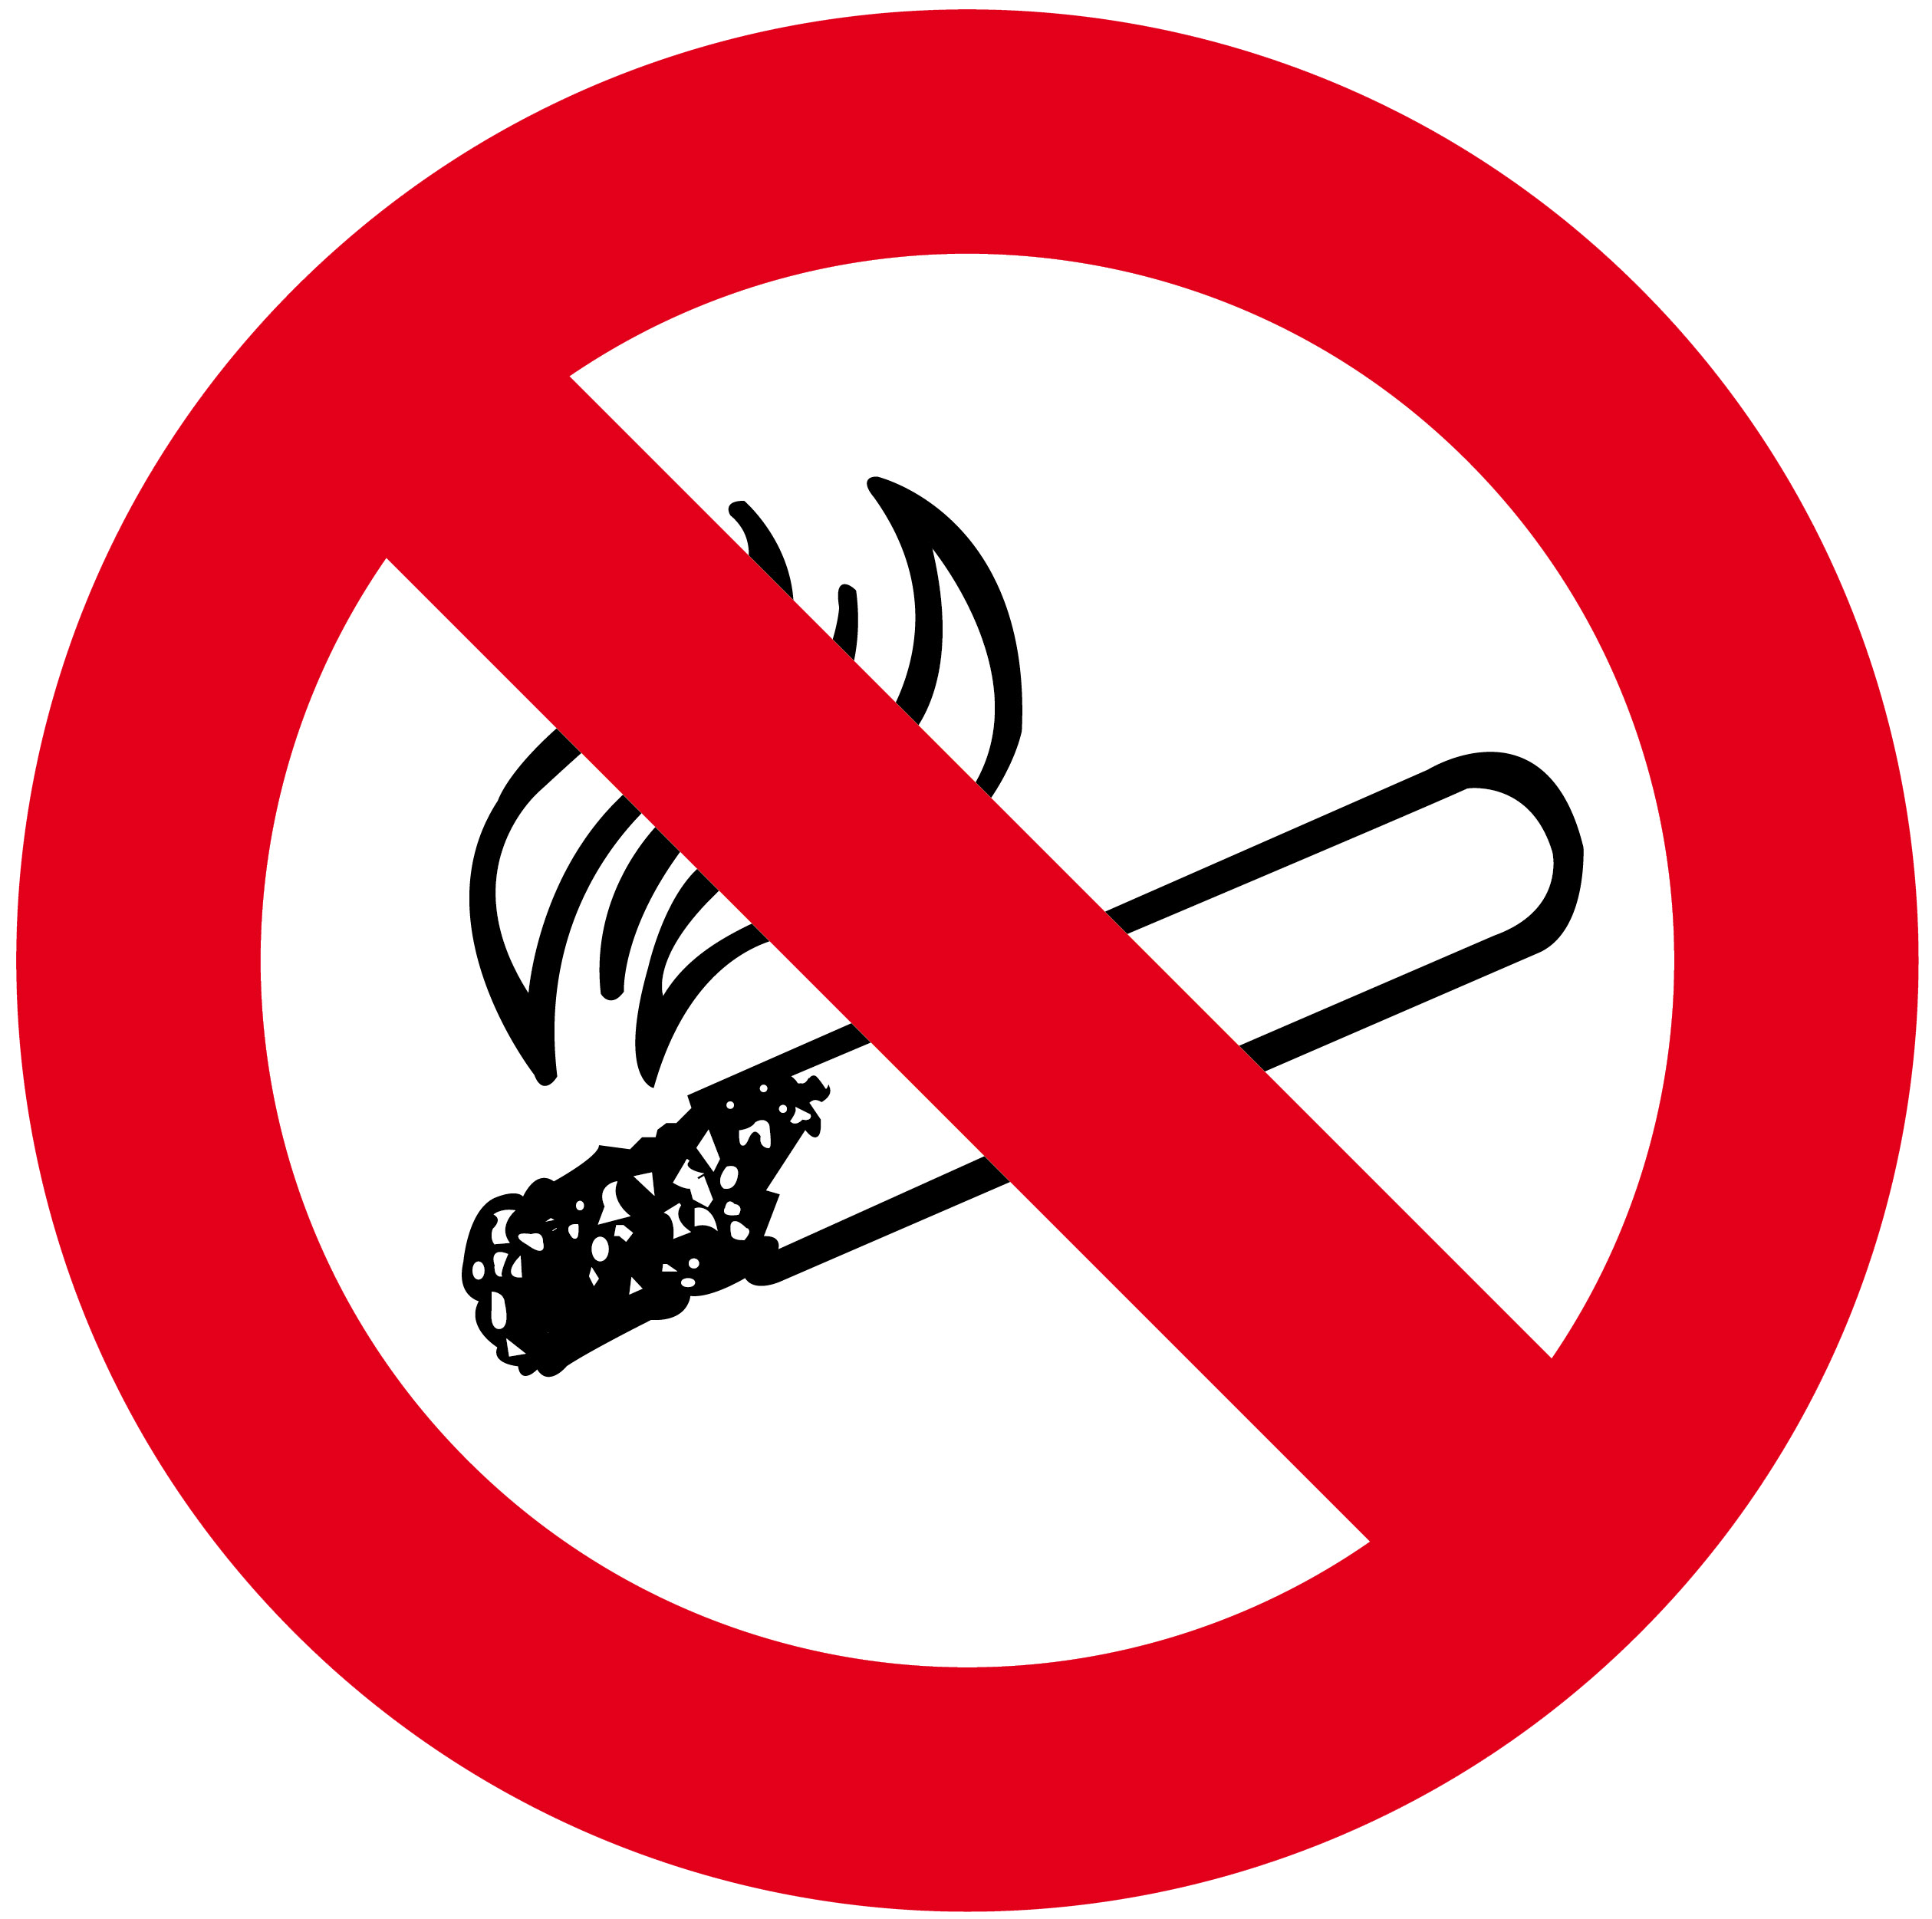 Adhesivo suelo prohibido fumar 30x30cm